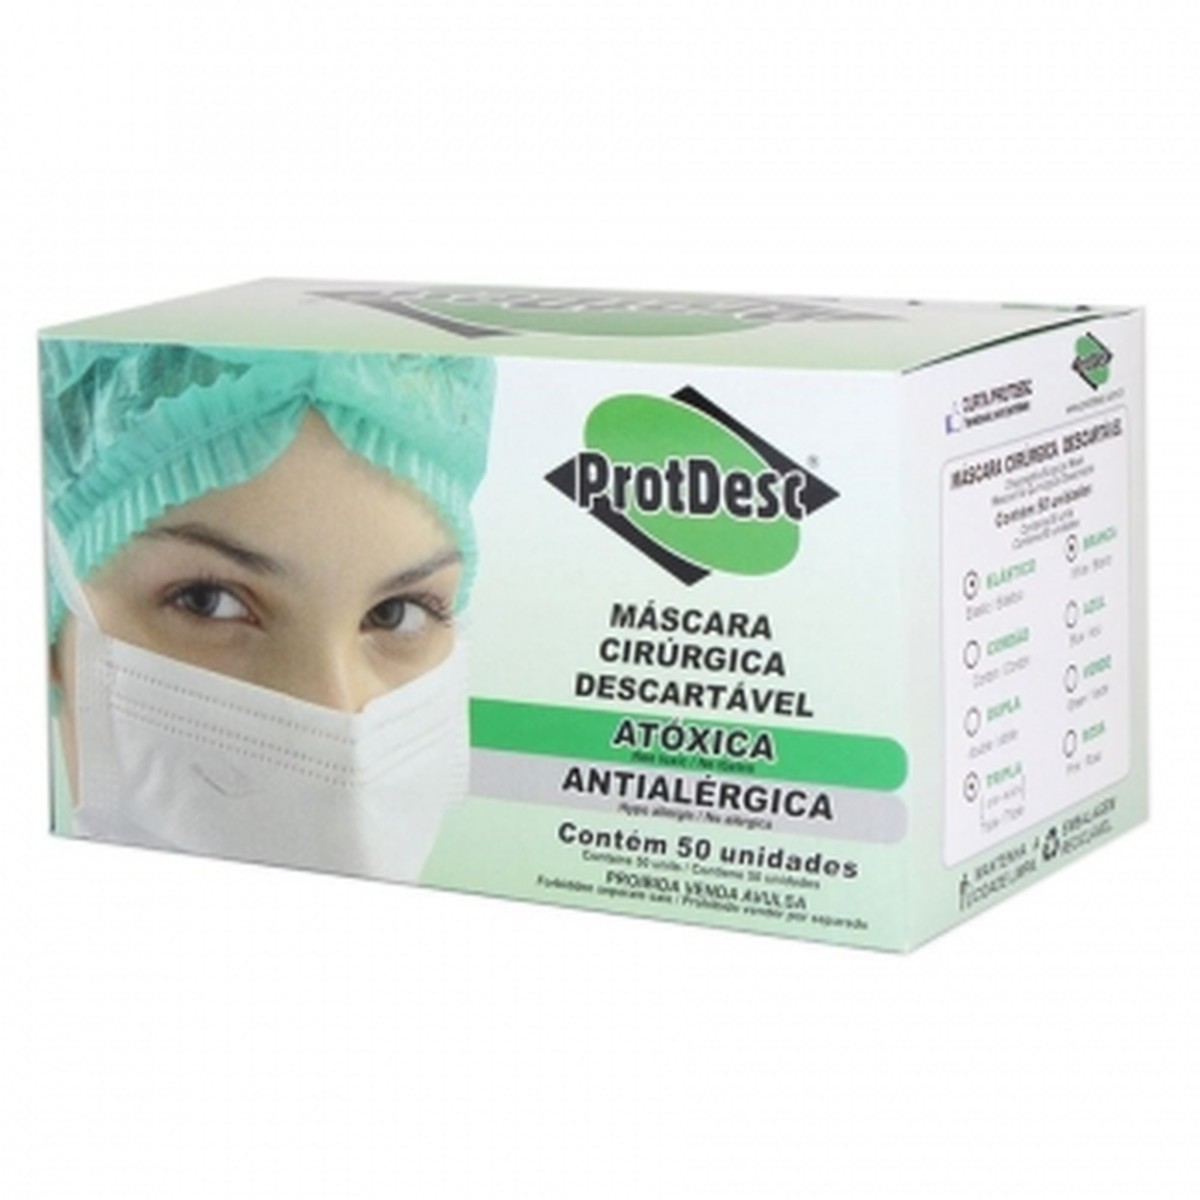 Foto do produto Máscara Cirúrgica Branca Descartável com Elástico caixa com 50 unid Protdesc